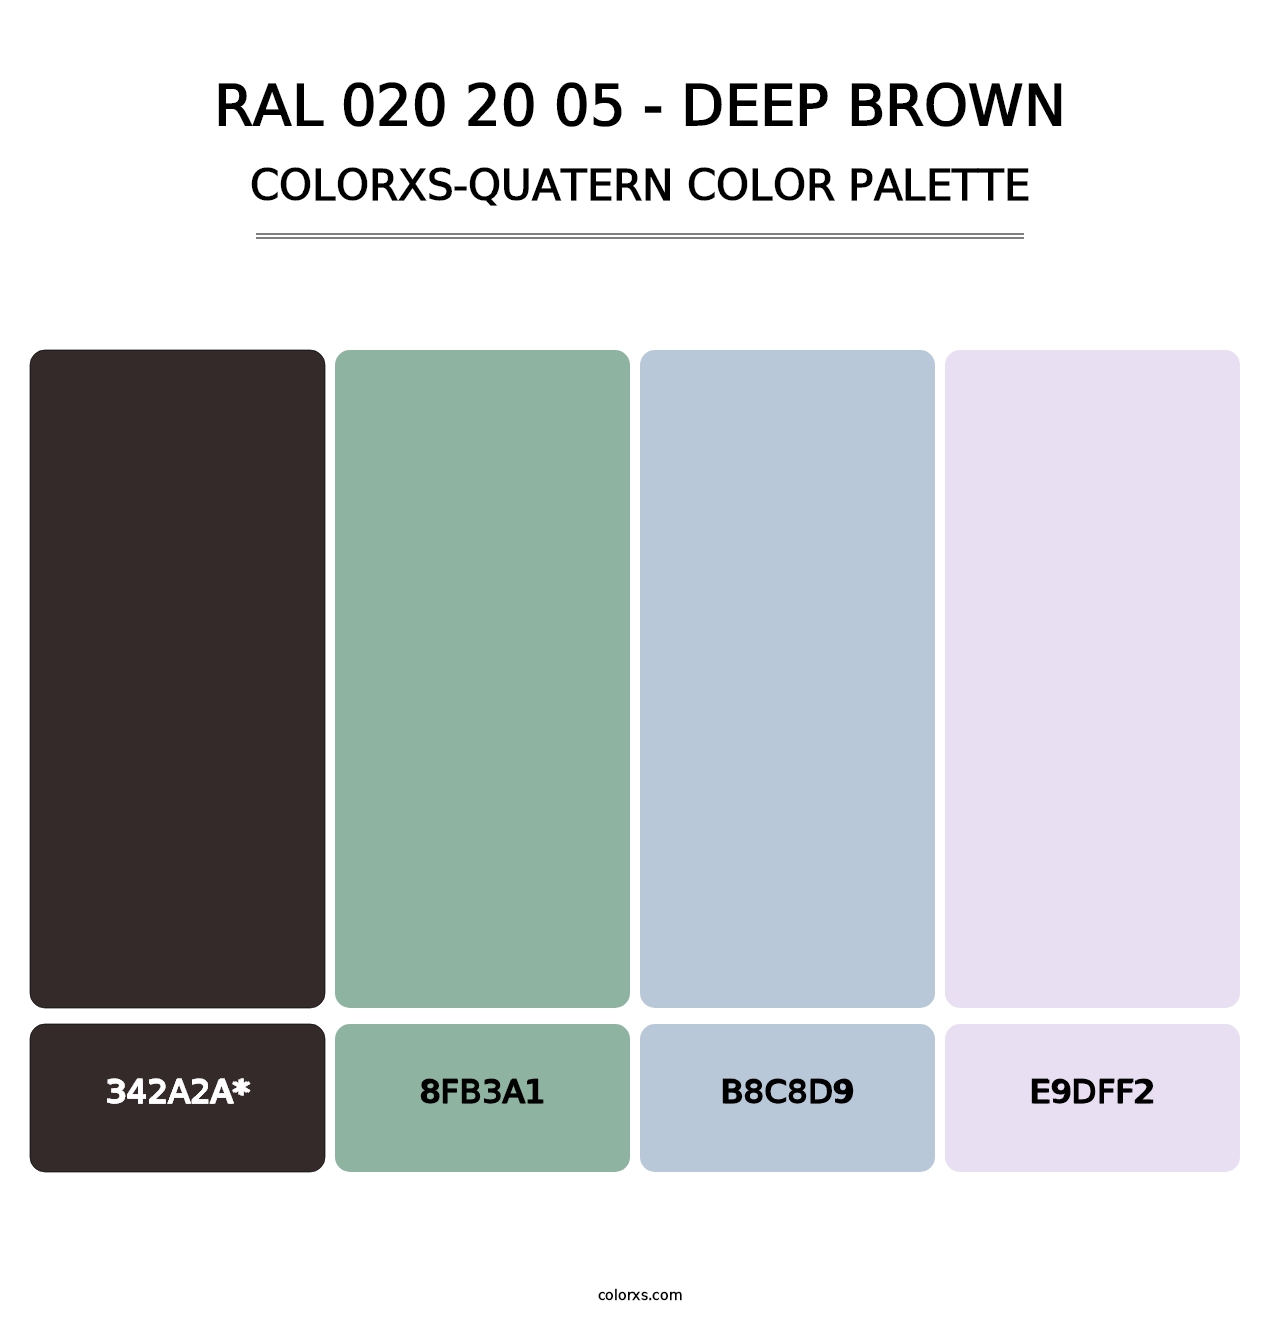 RAL 020 20 05 - Deep Brown - Colorxs Quatern Palette